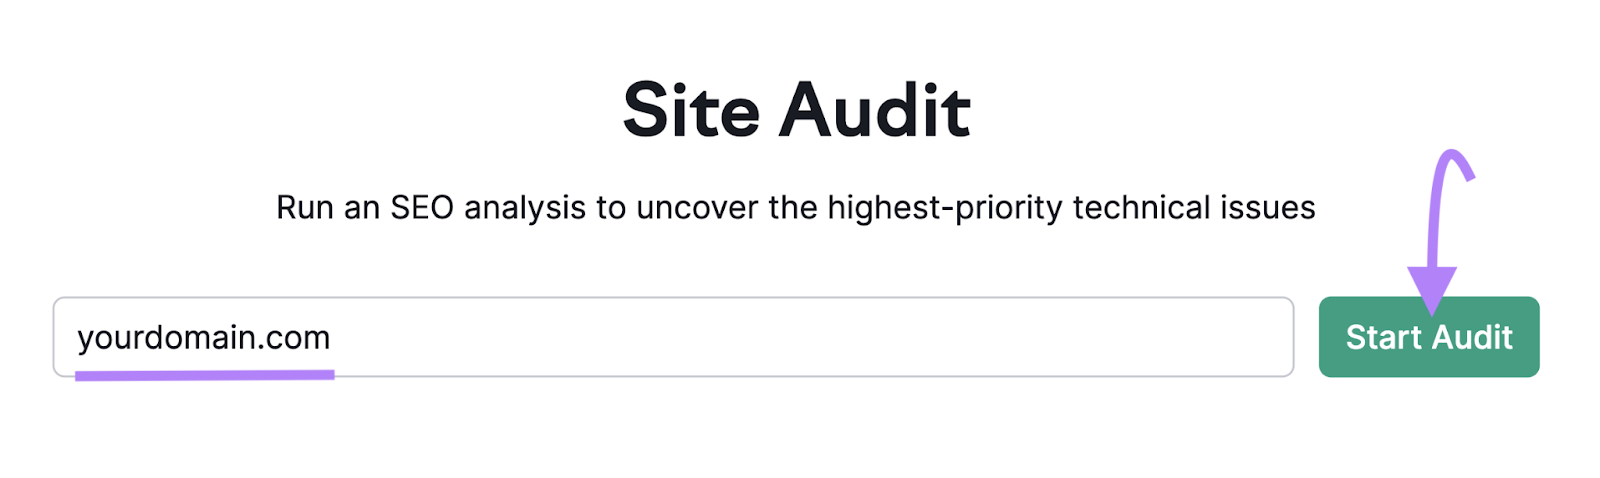 start audit button highlighted